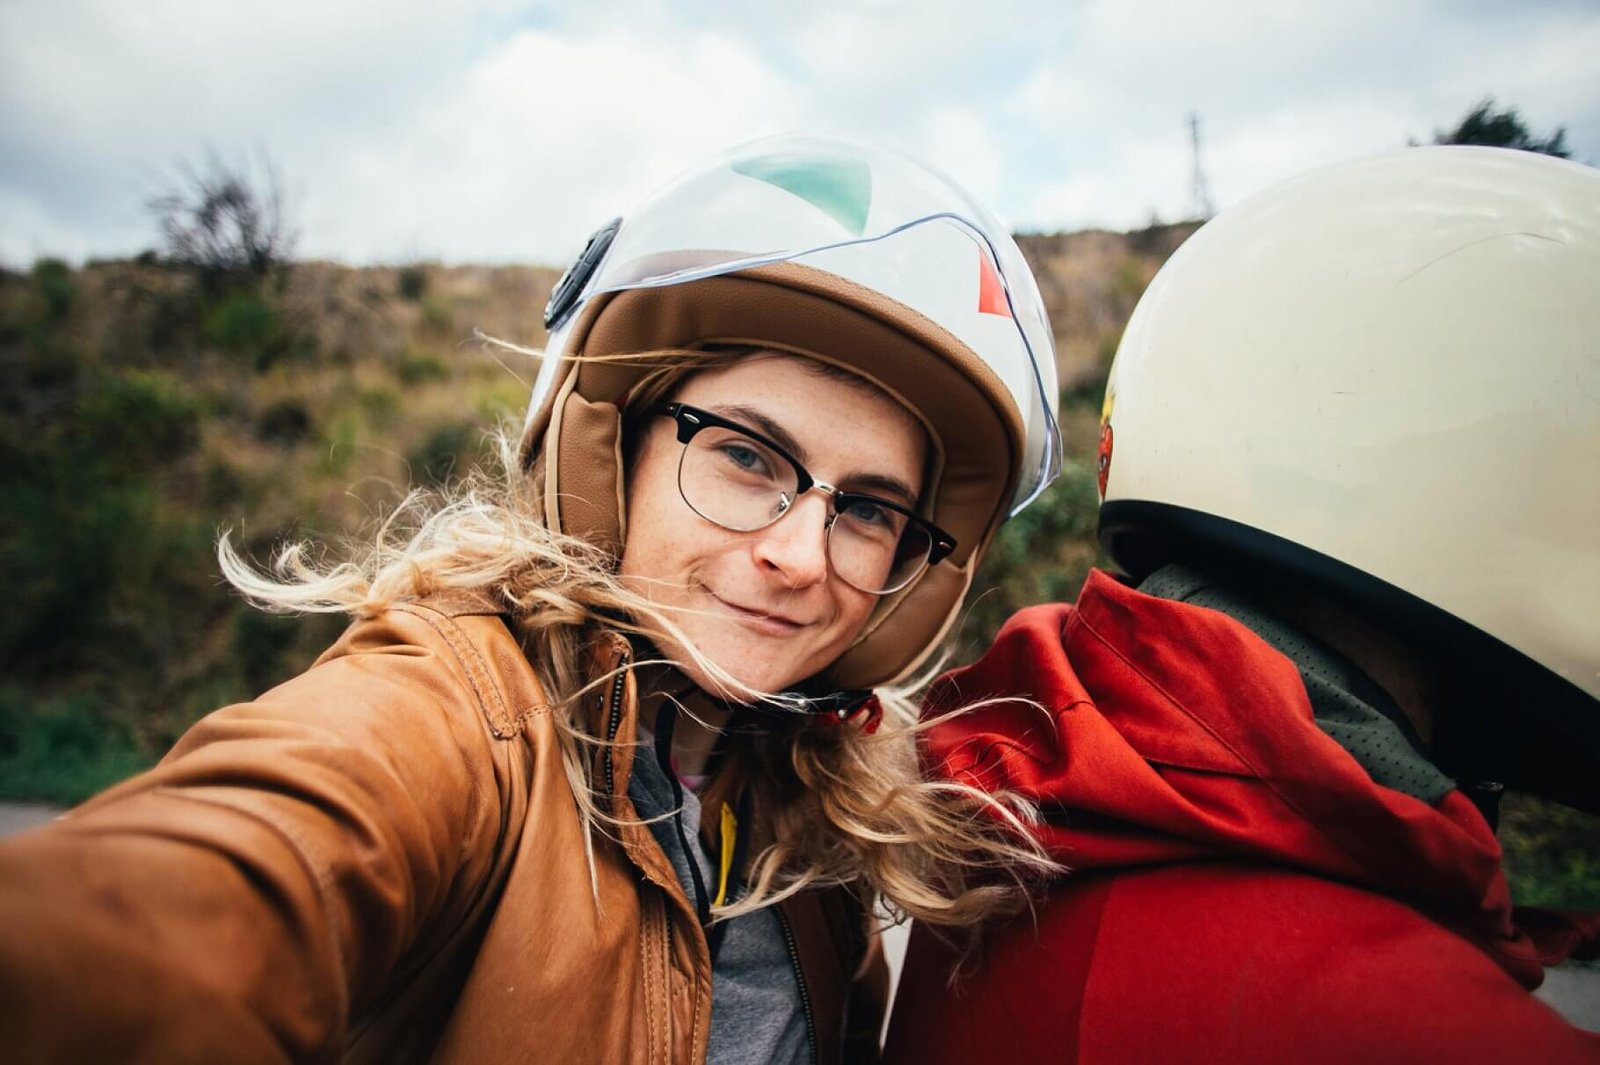 The Passenger Taking Selfie With Her Helmet On Mockup